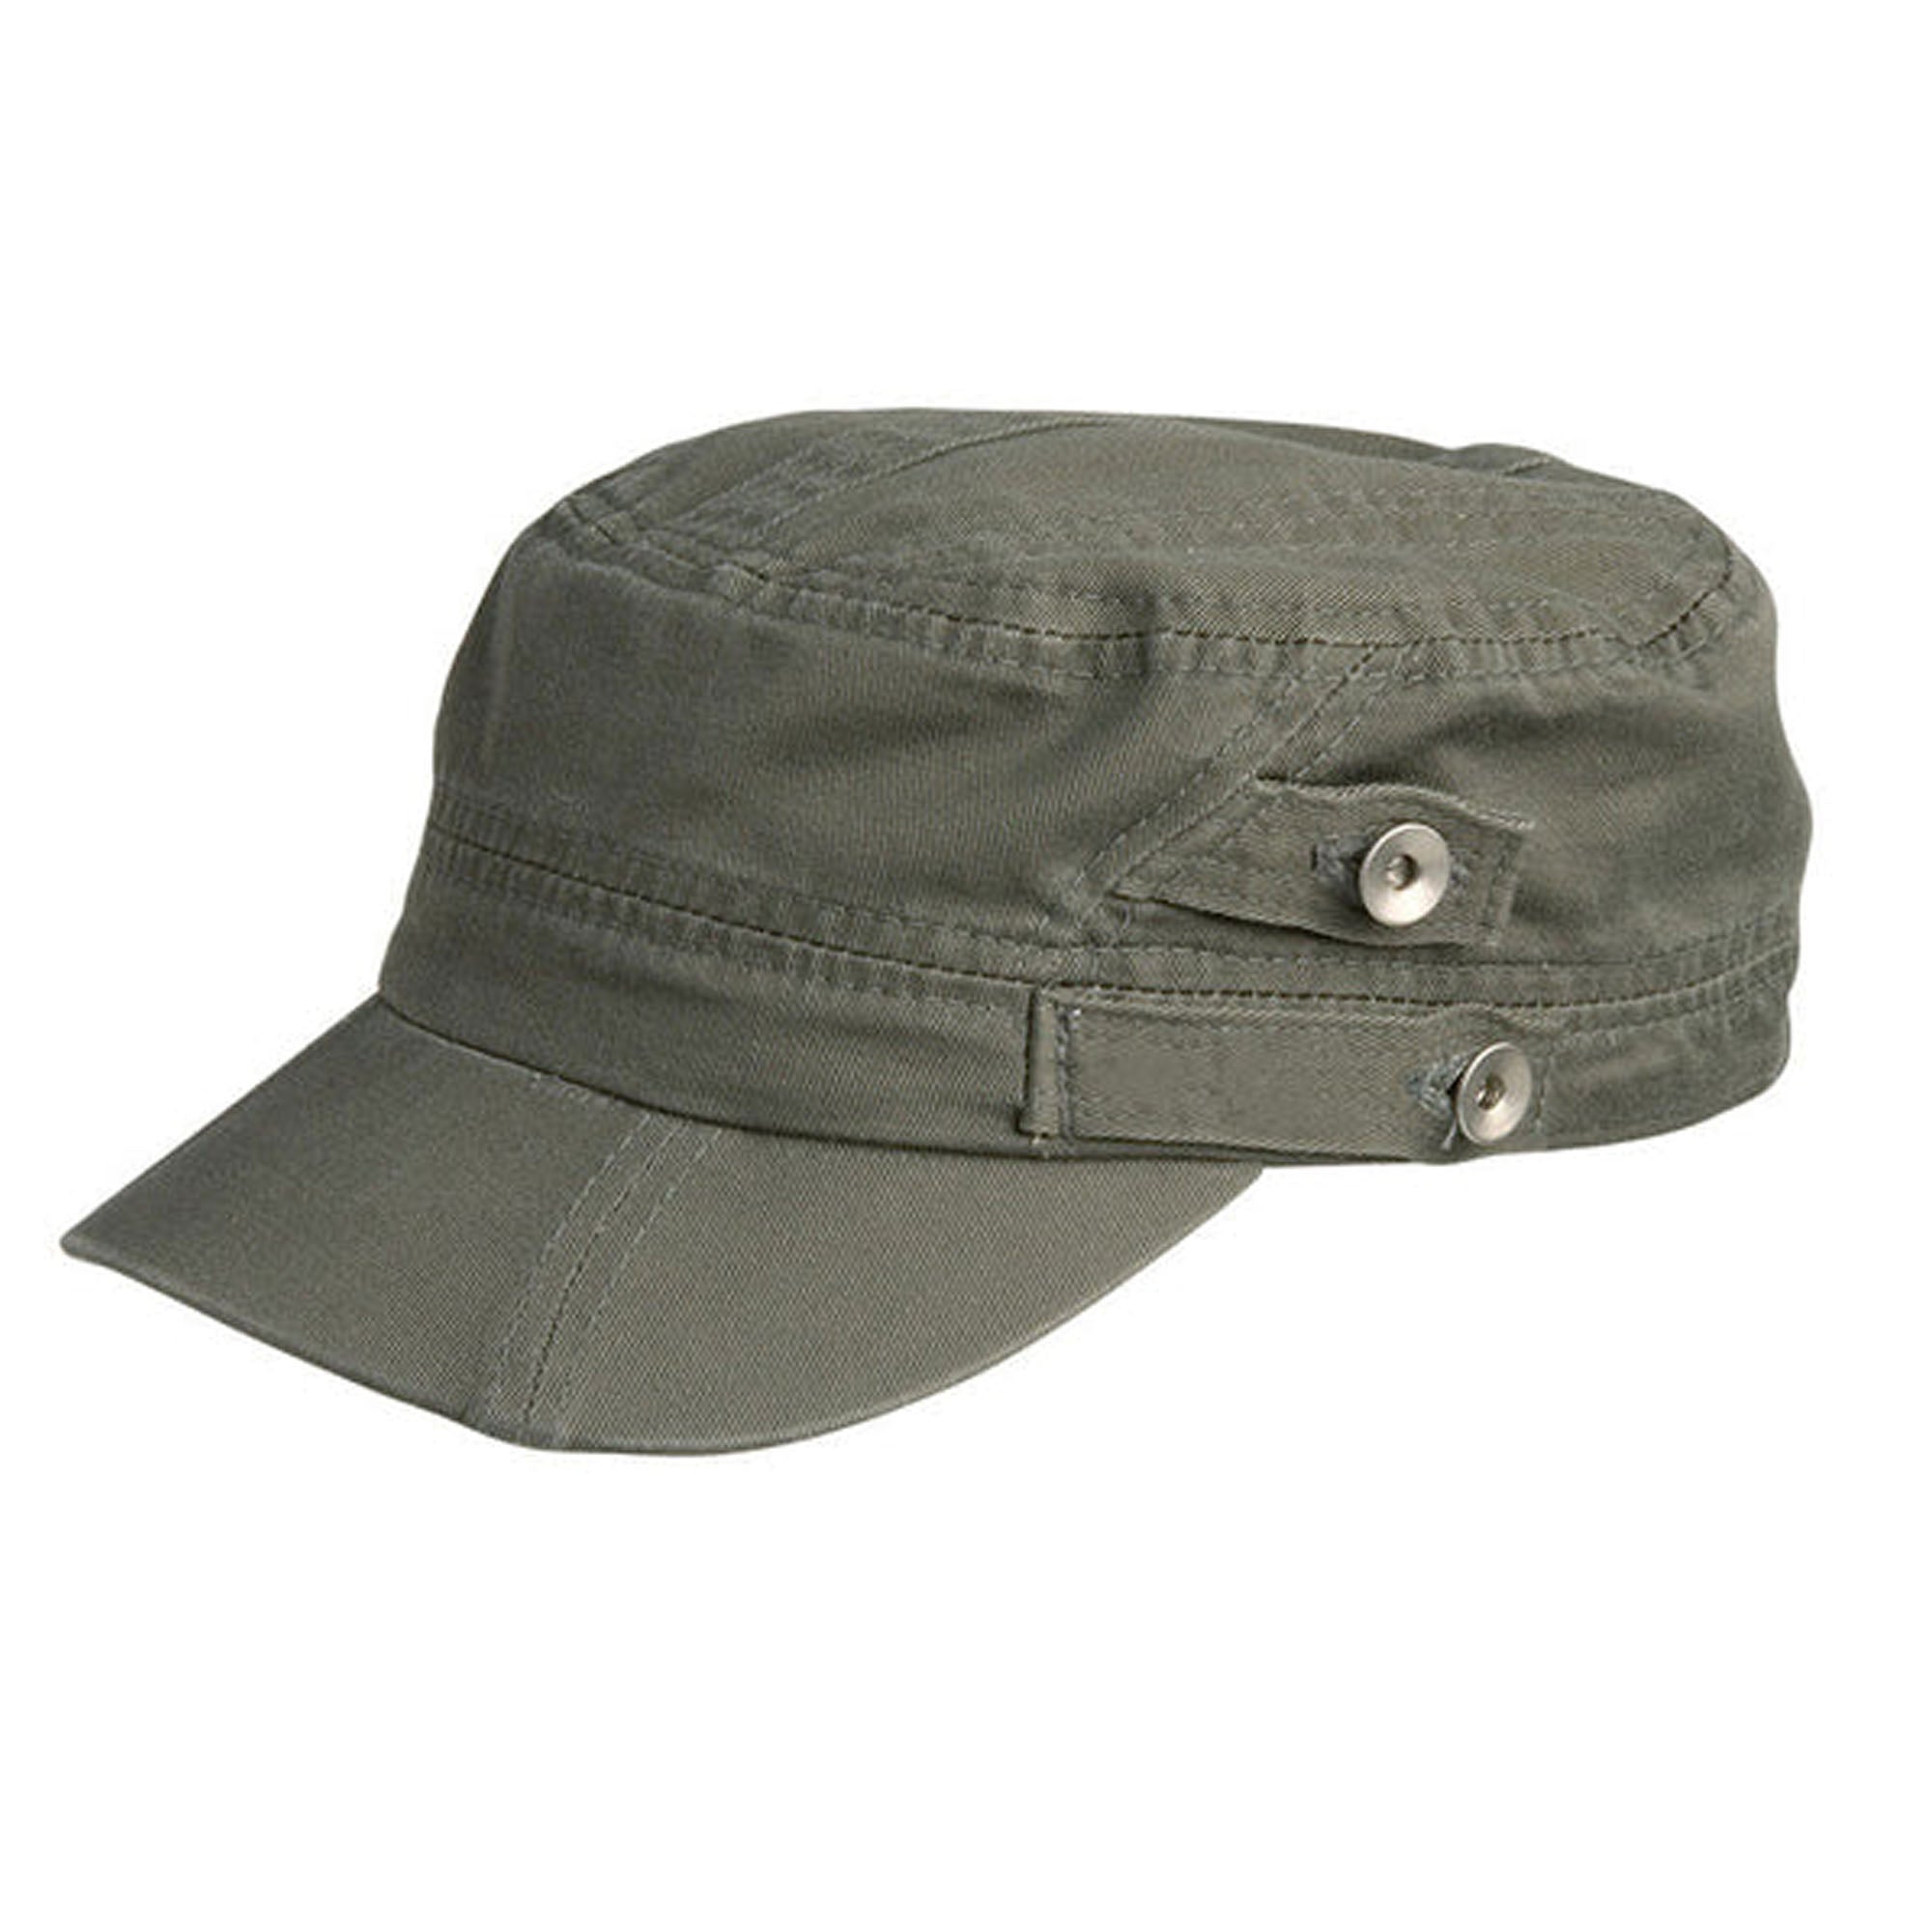 Conner Handmade Hats Reduce Organic Cotton Army Fatigue Men's Hat